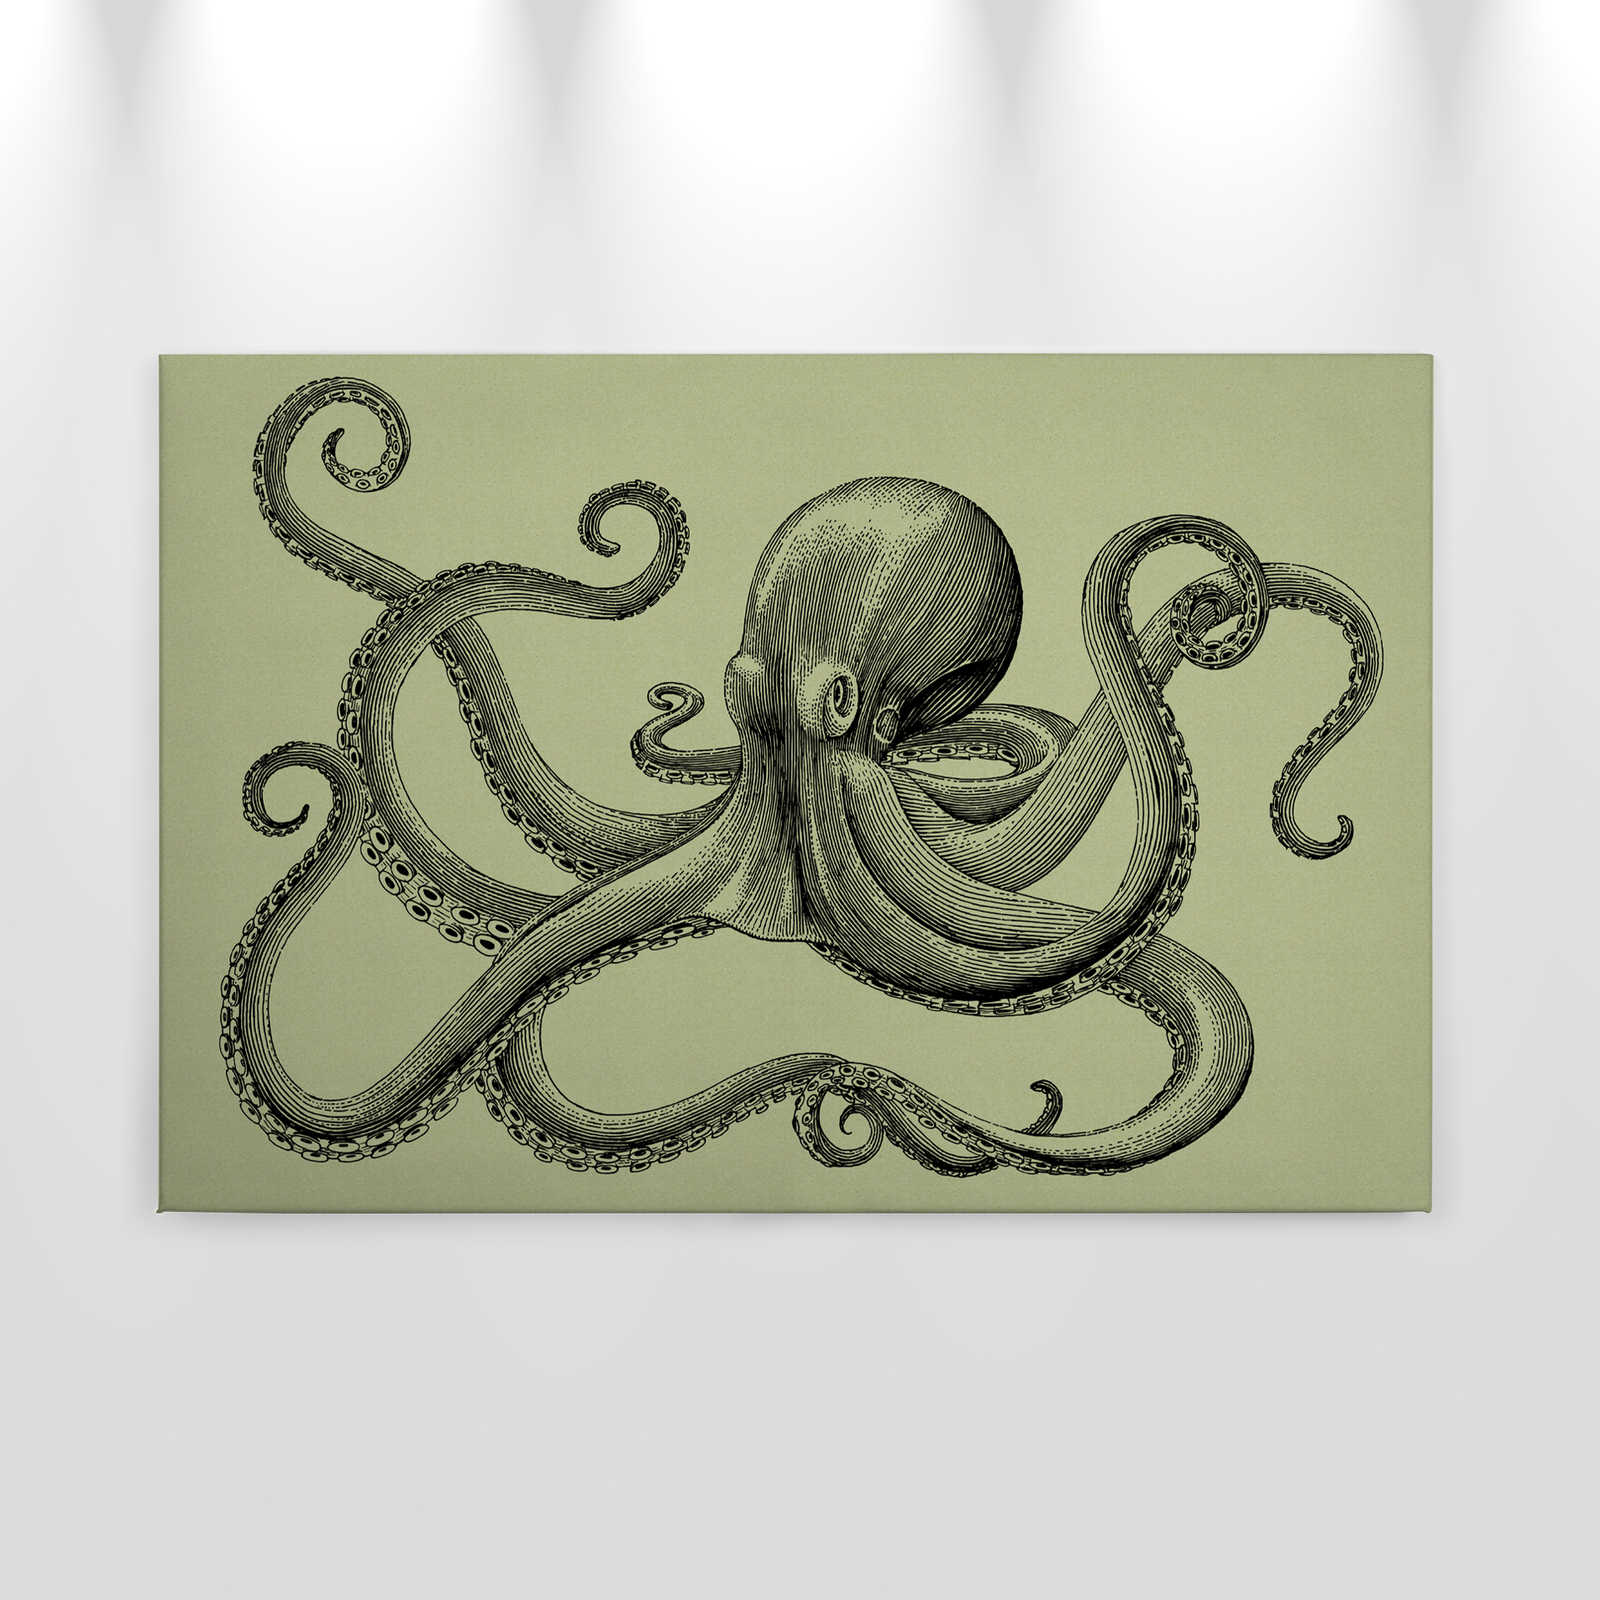             Jules 3 - Quadro su tela Octopus in stile schizzo e look vintage - Natura qualita consistenza in cartone - 0,90 m x 0,60 m
        